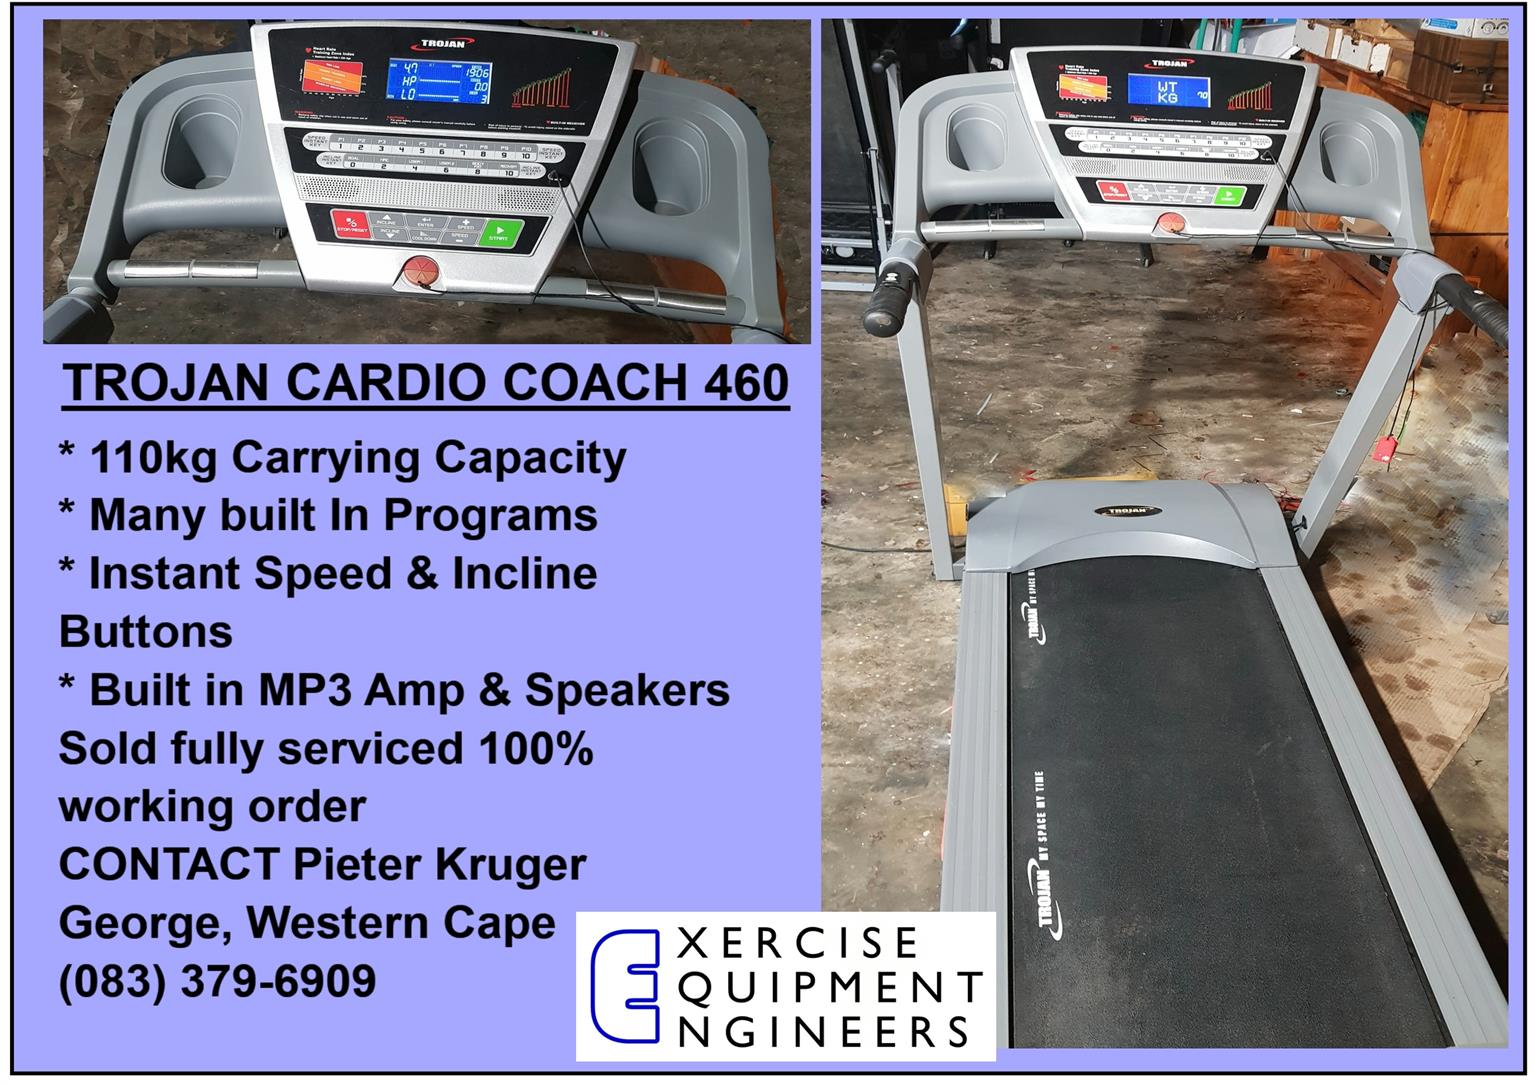 Trojan Cardio Coach 460 Treadmill